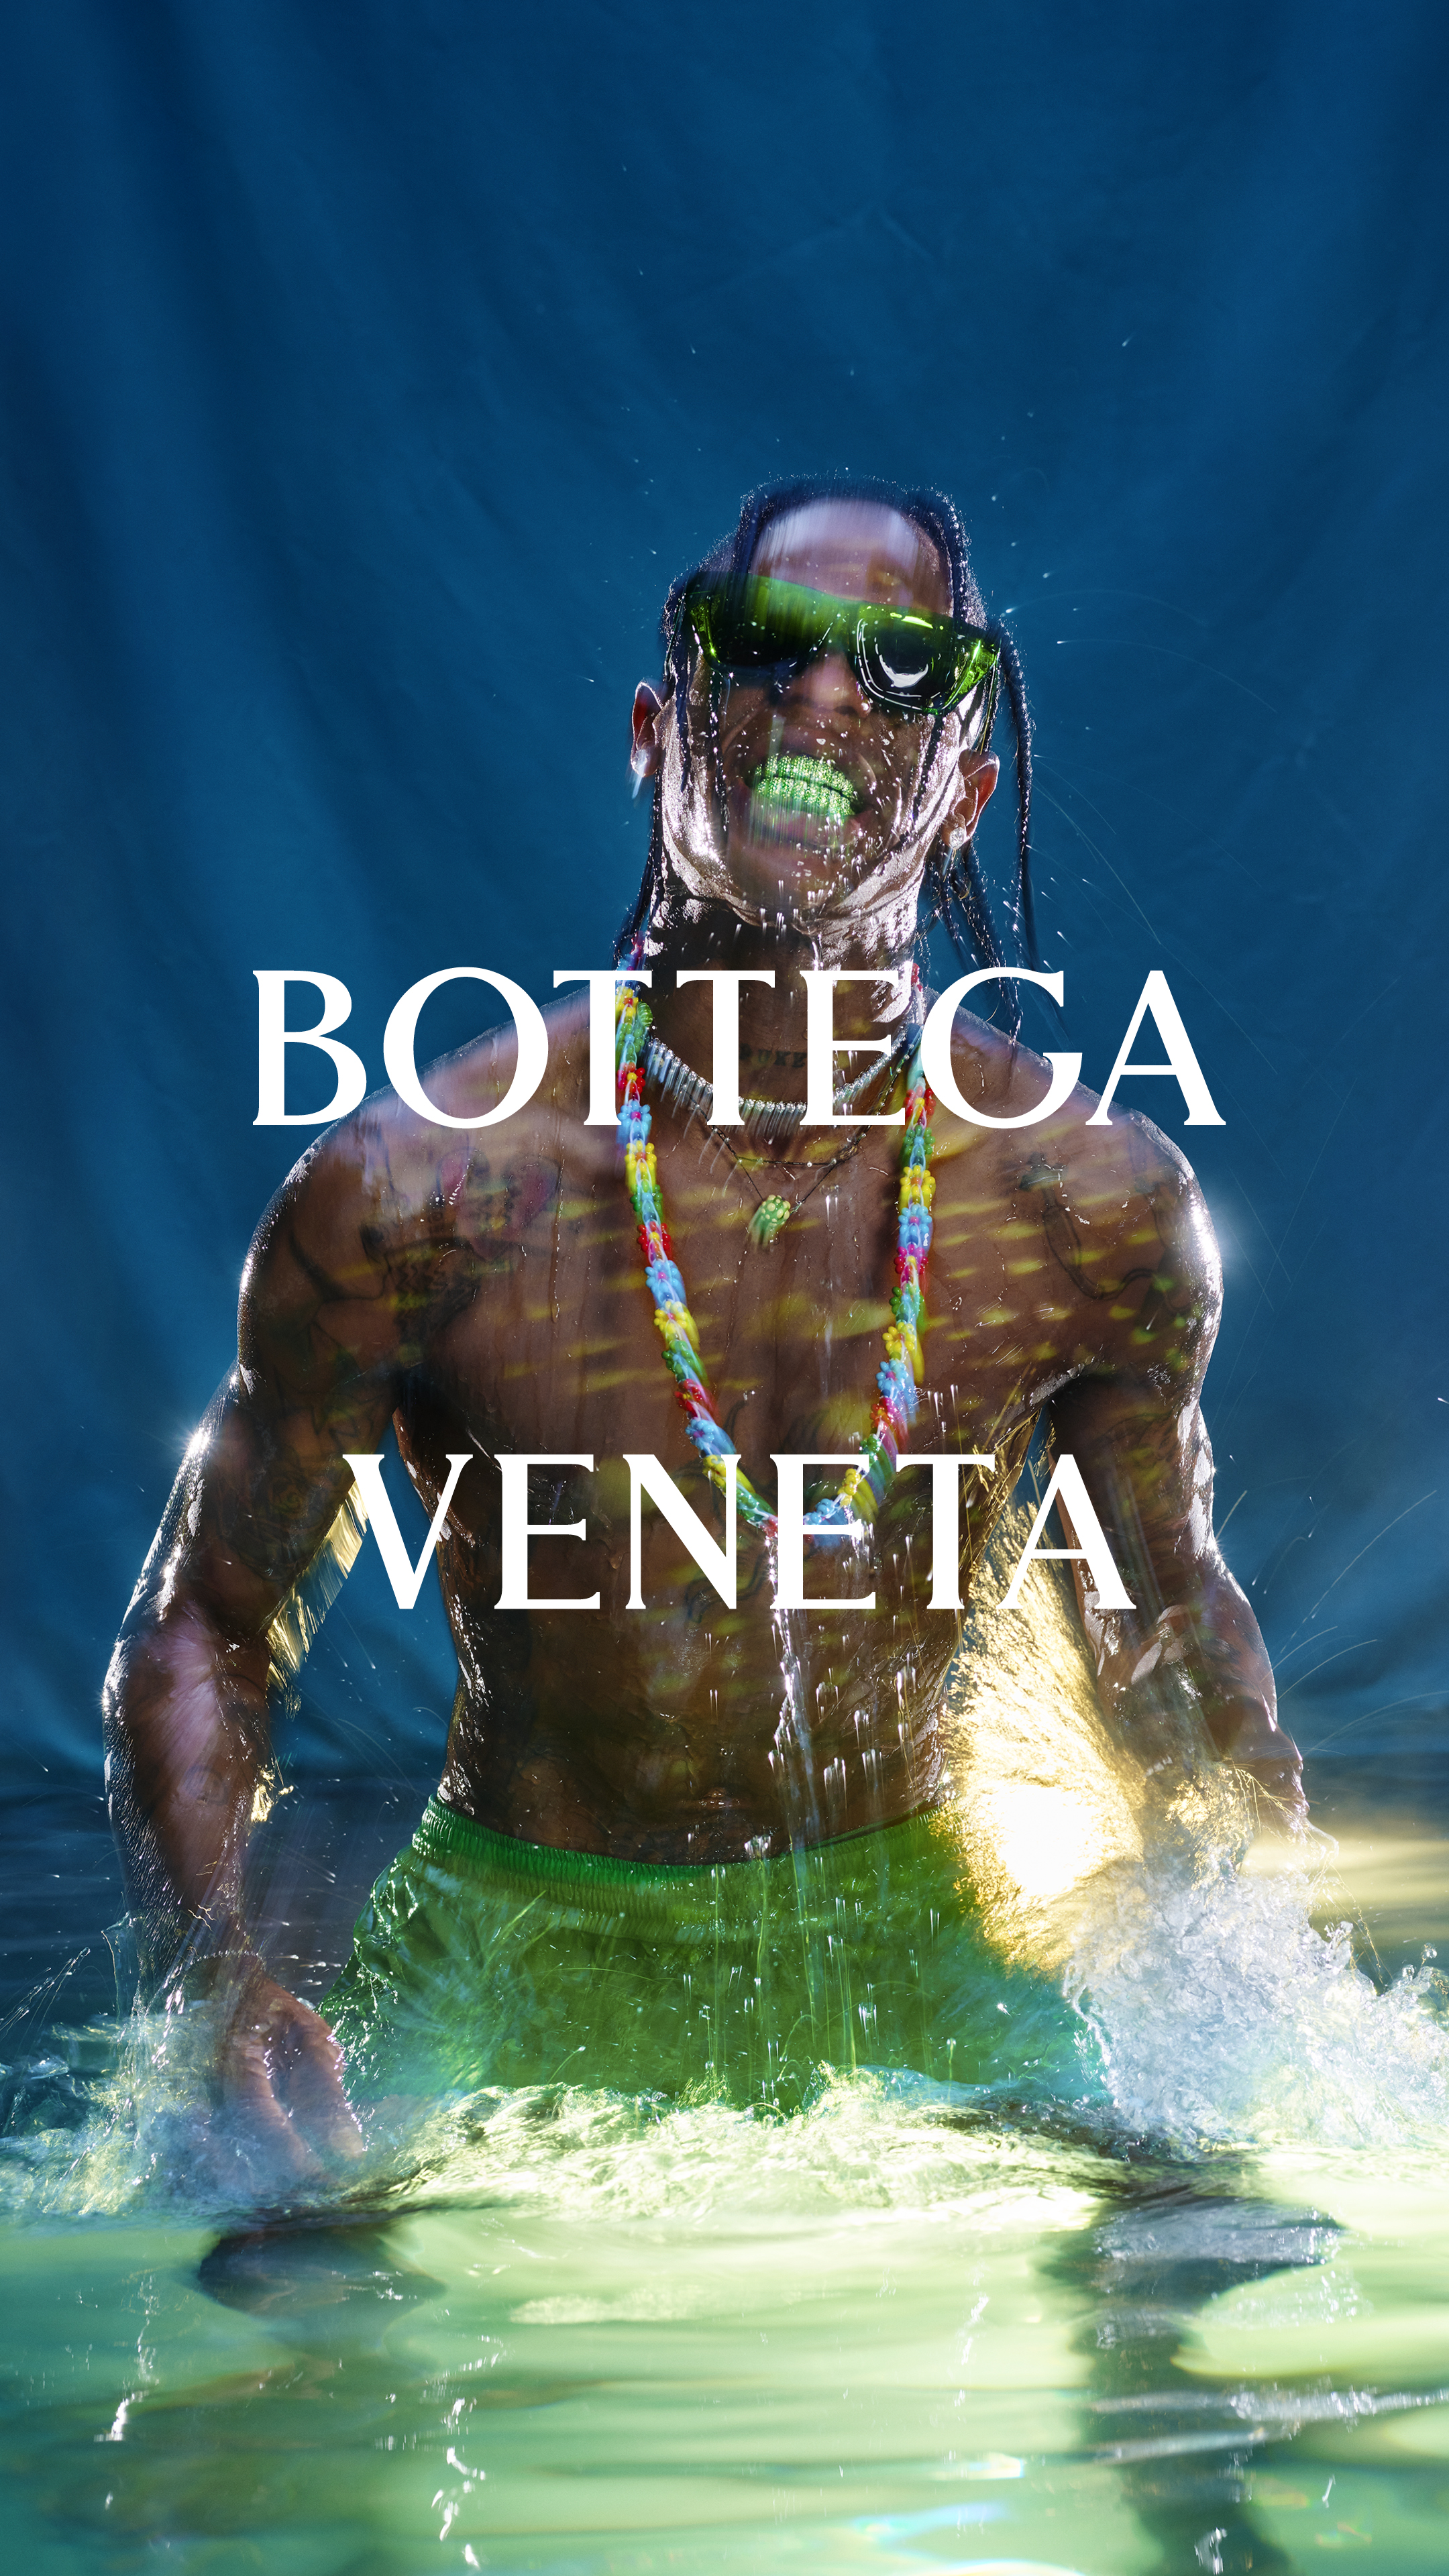 Travis Scott for Bottega Veneta by David Lachapelle